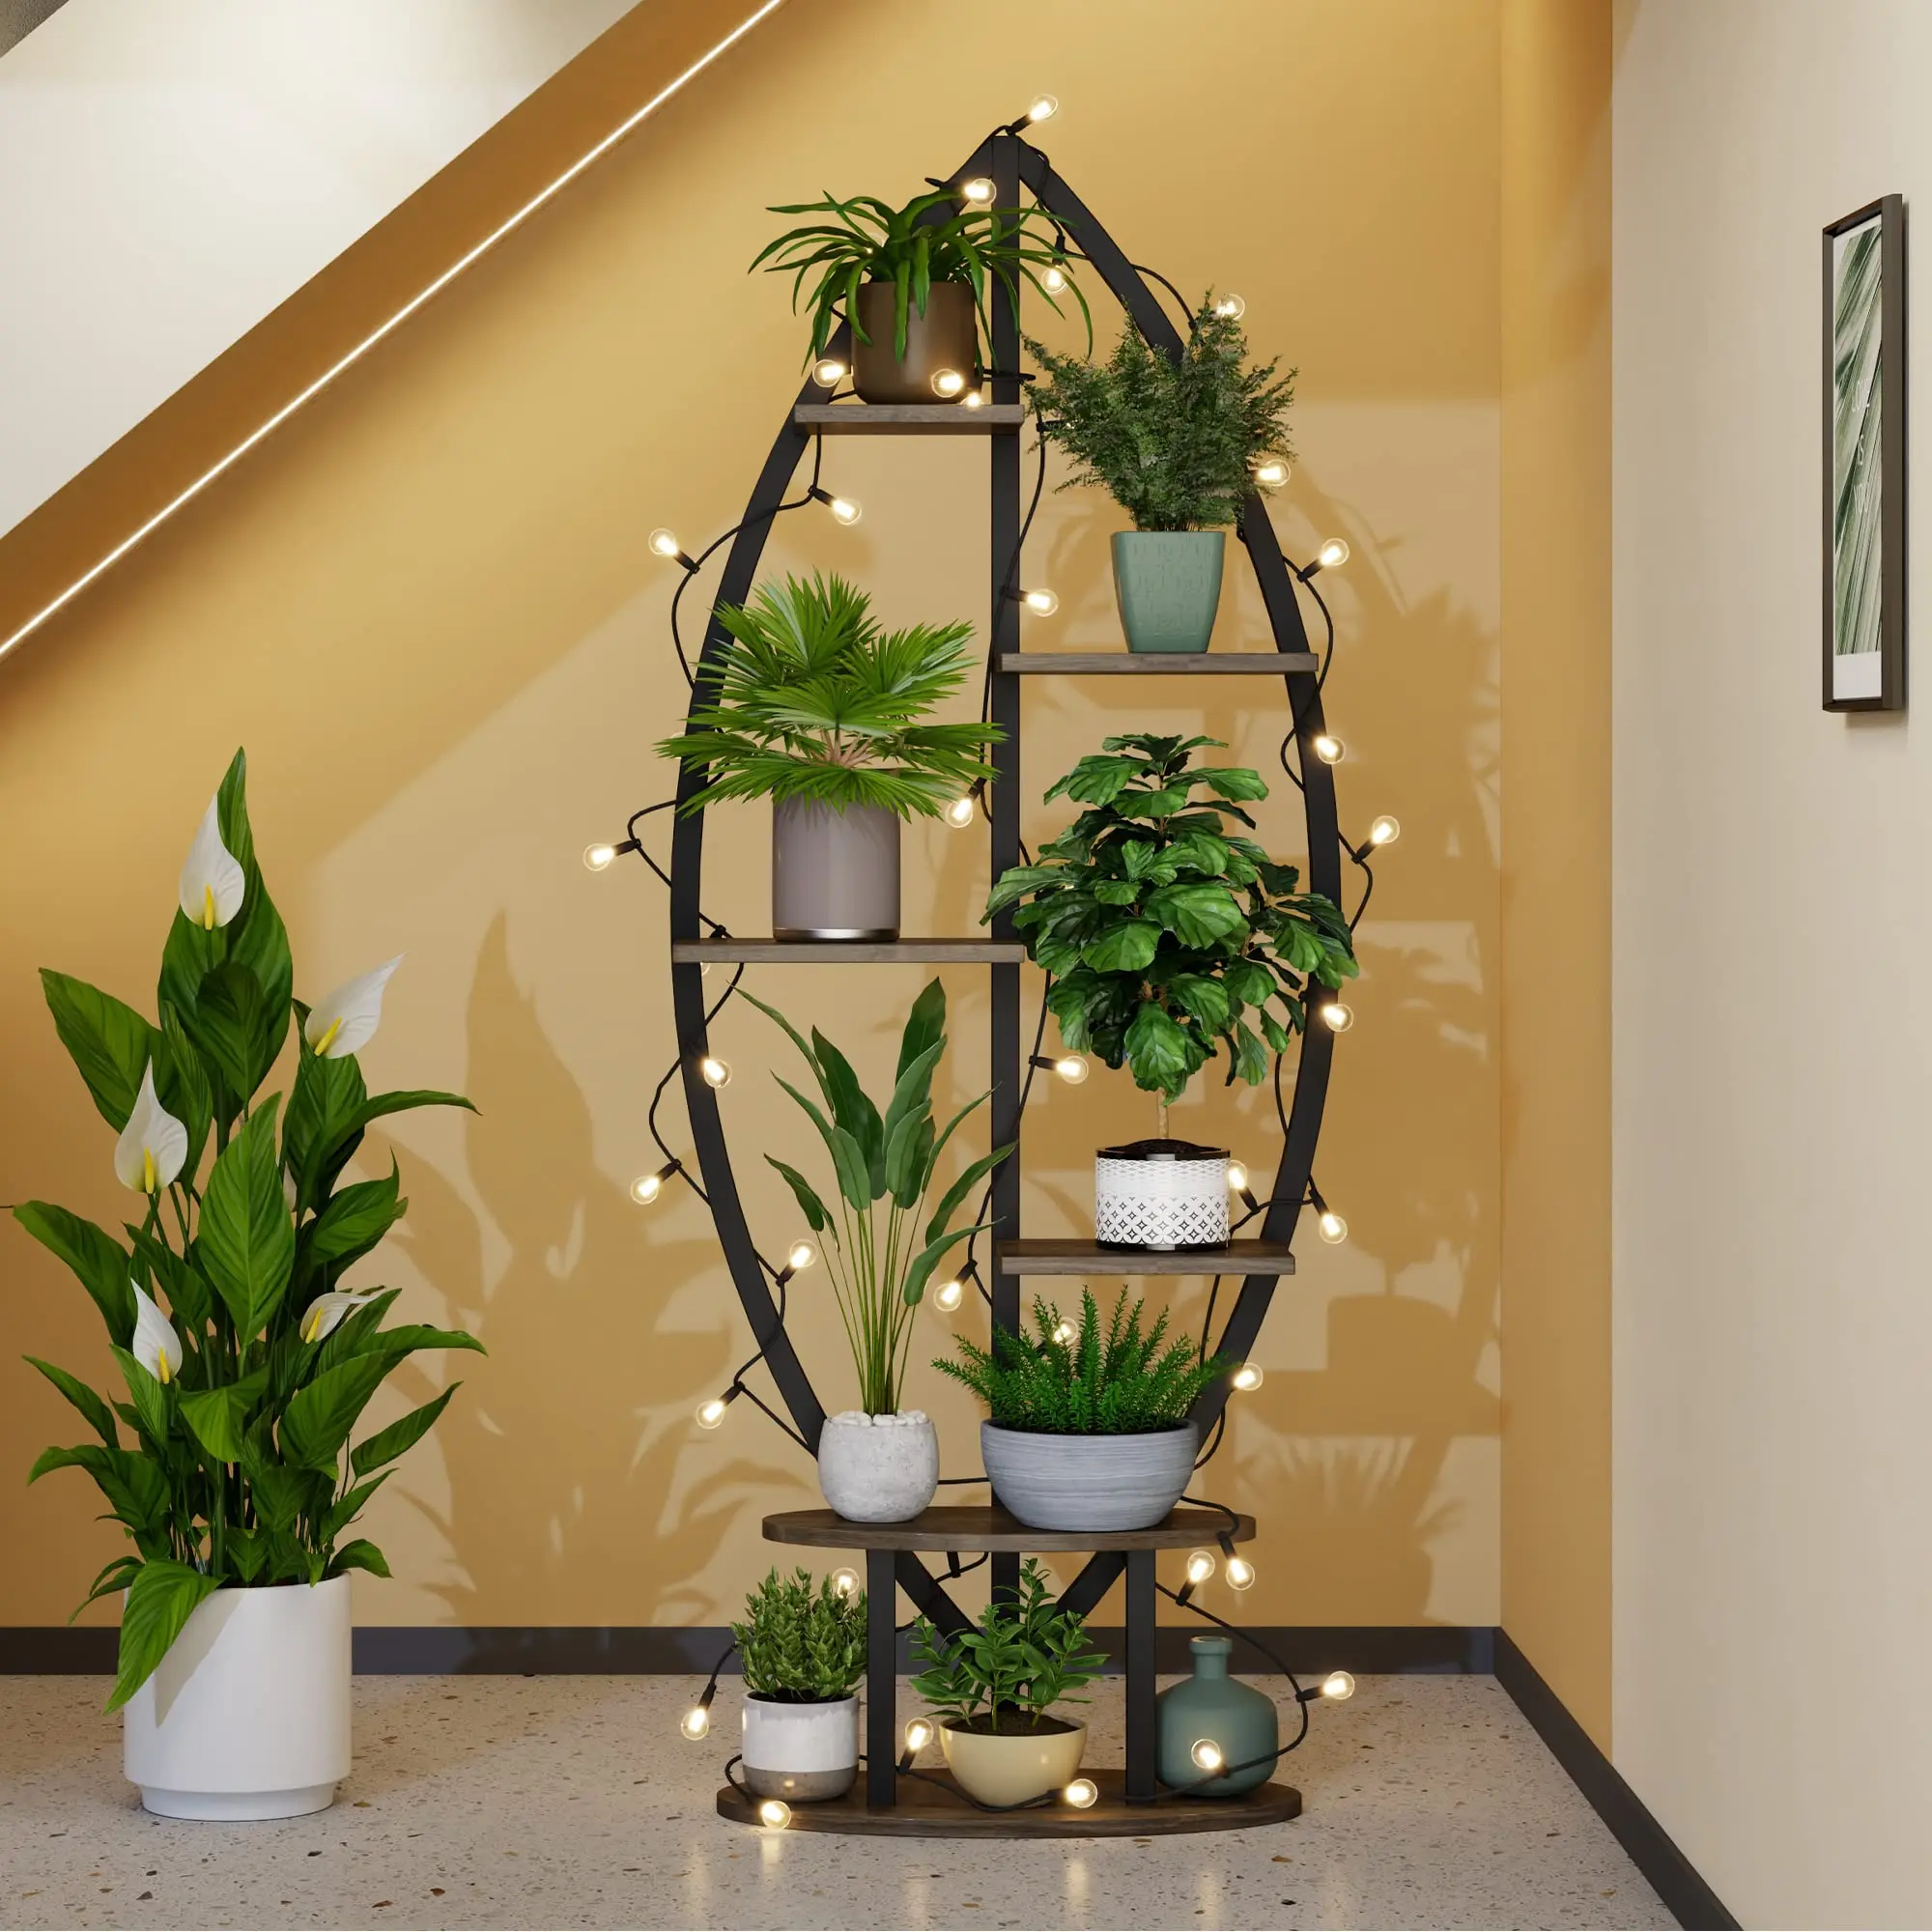 Wholesales Home Decor Living Room Balcony Leaf-Shape Metal Plant Shelf 6 Tier Flower Plant Stands